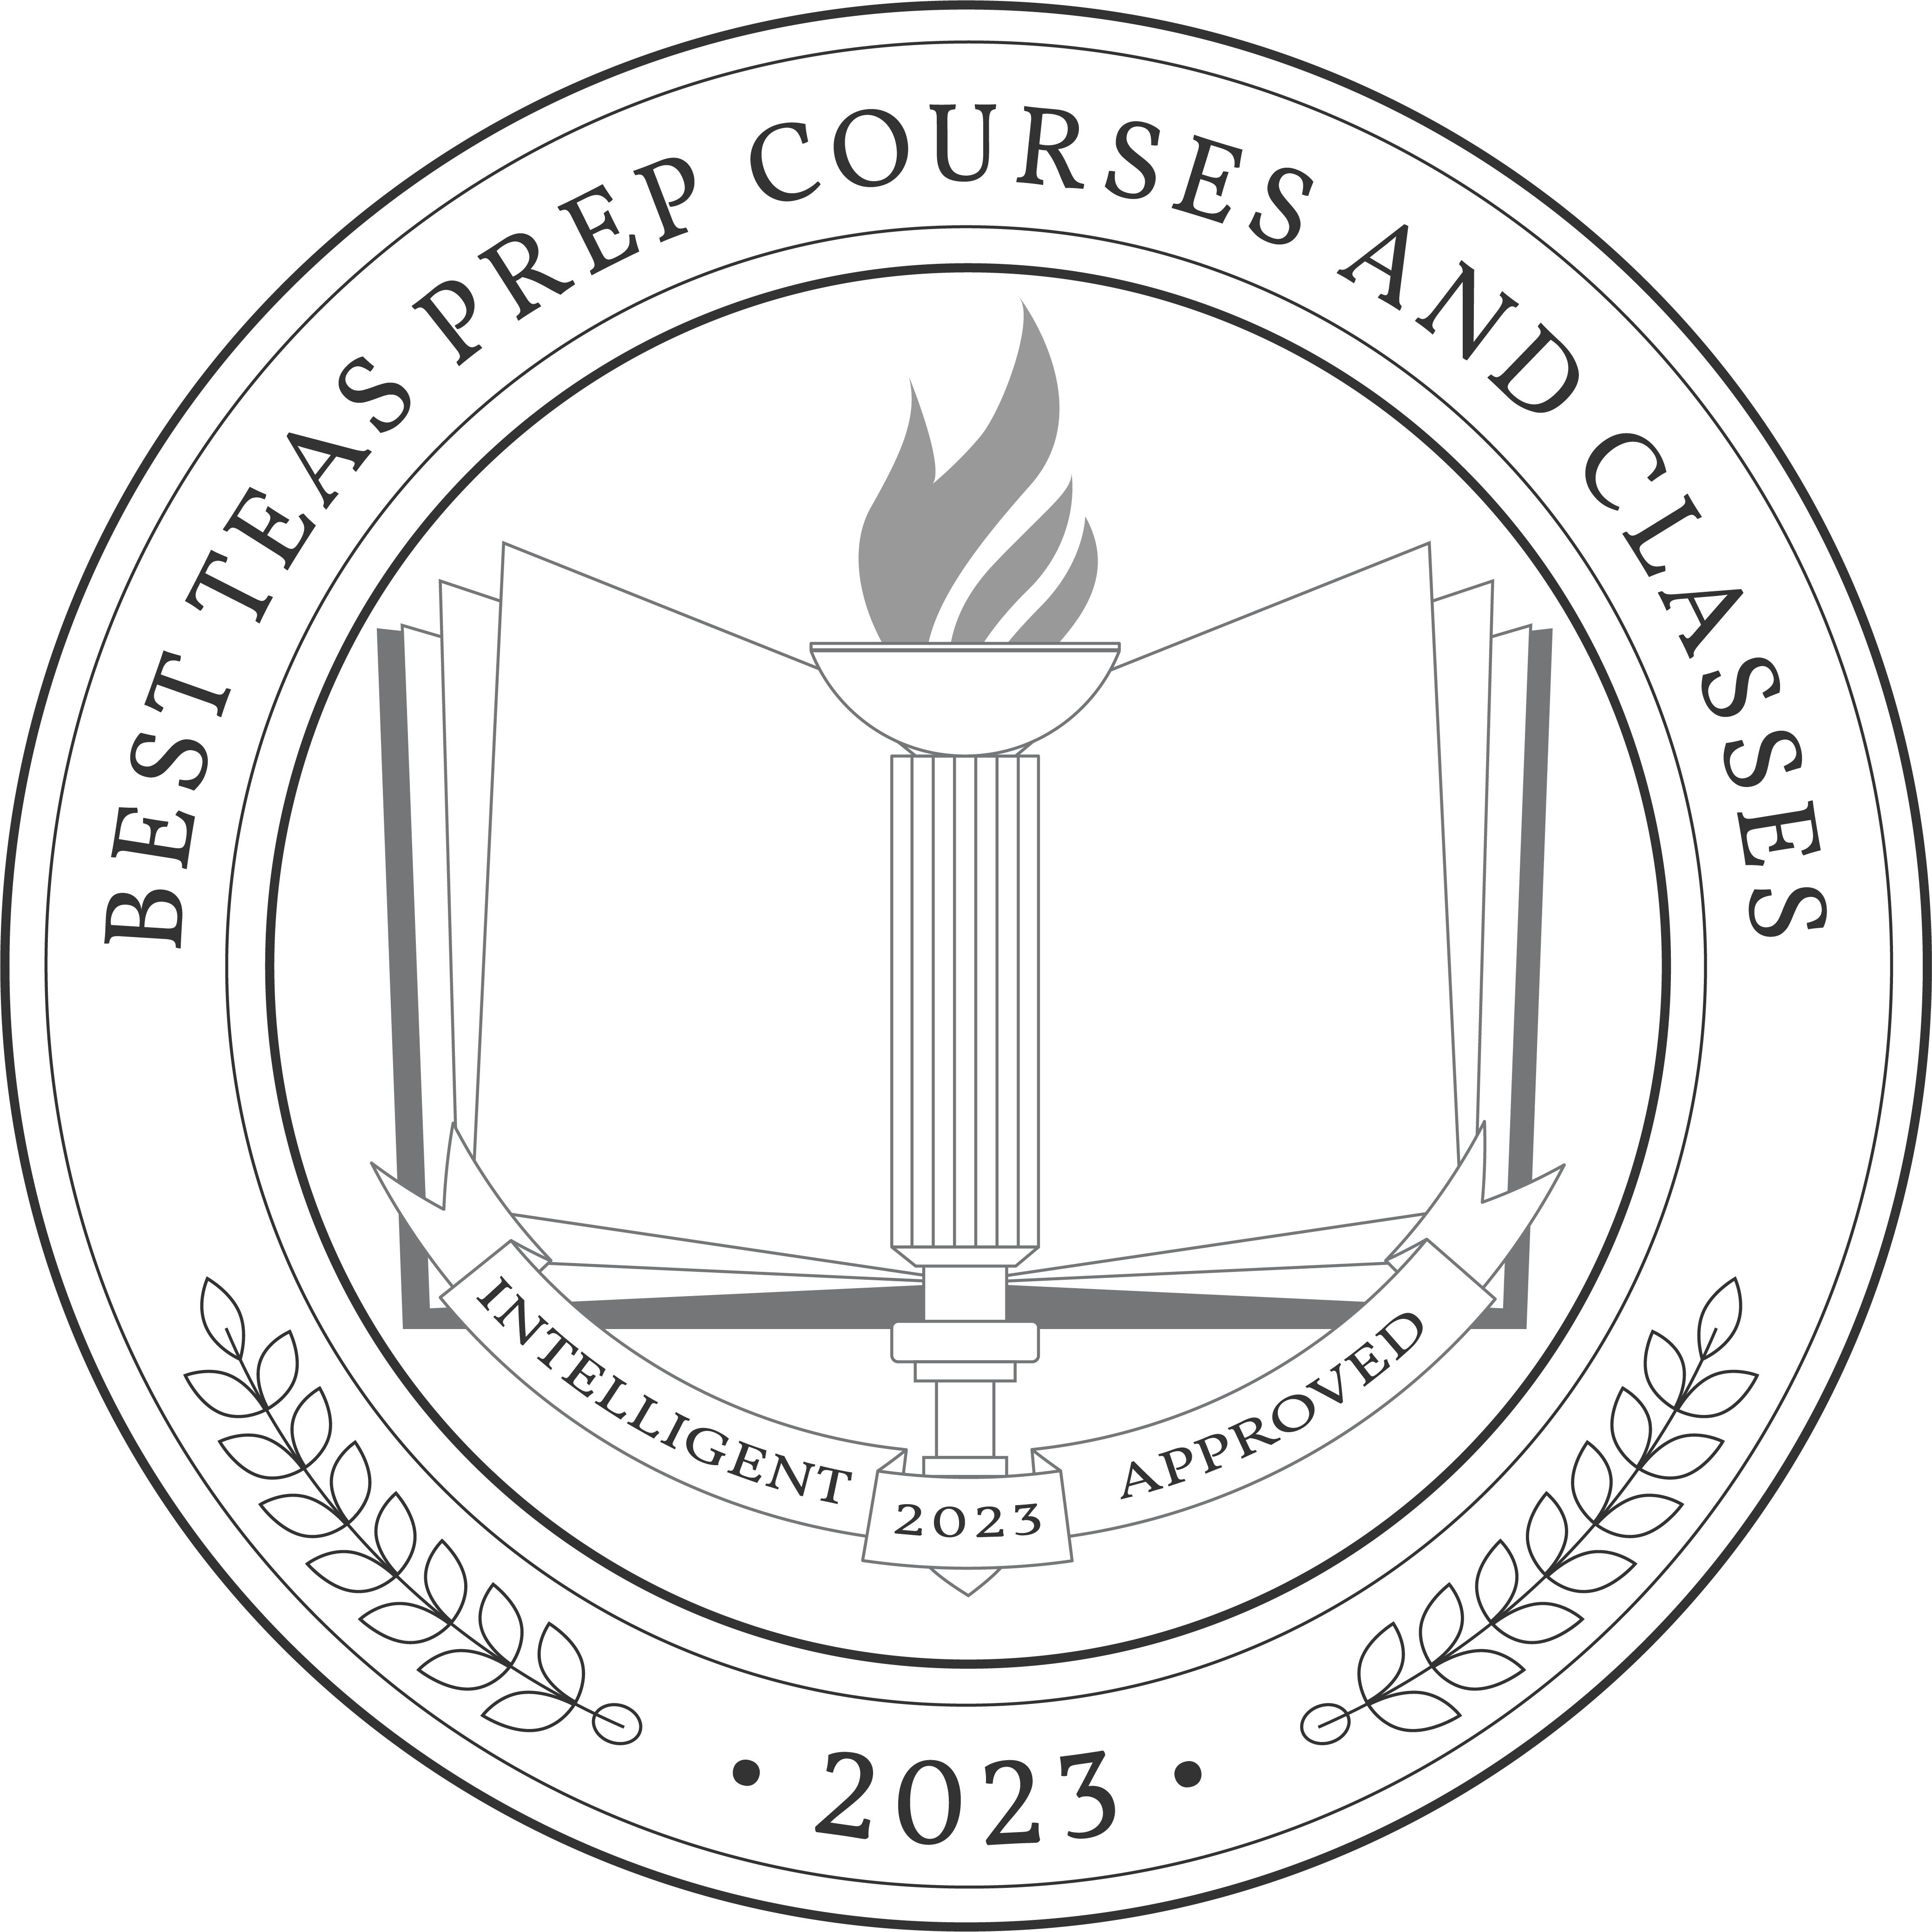 Best TEAS Prep Courses and Classes Badge